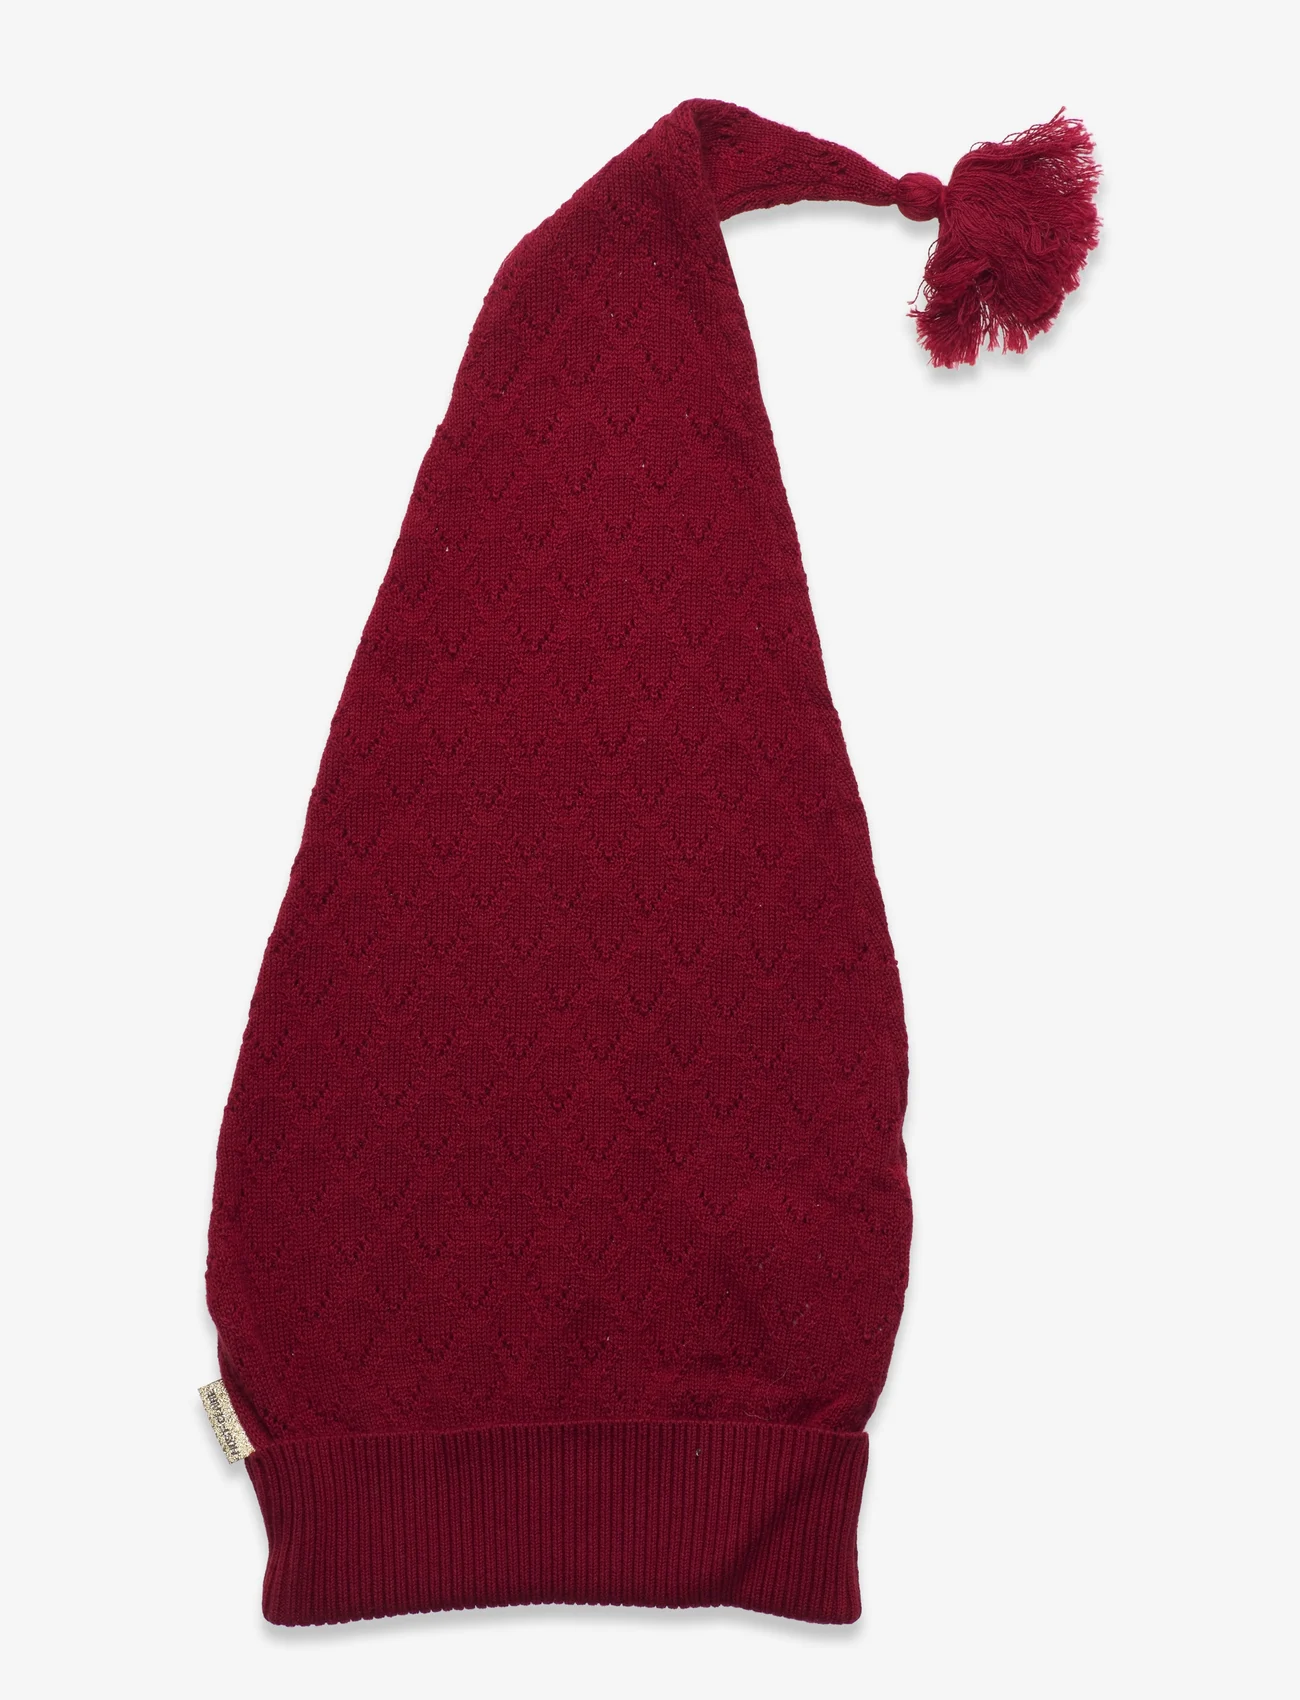 Hust & Claire - Fifi - Christmas hat - kostiumų priedai - teaberry - 1